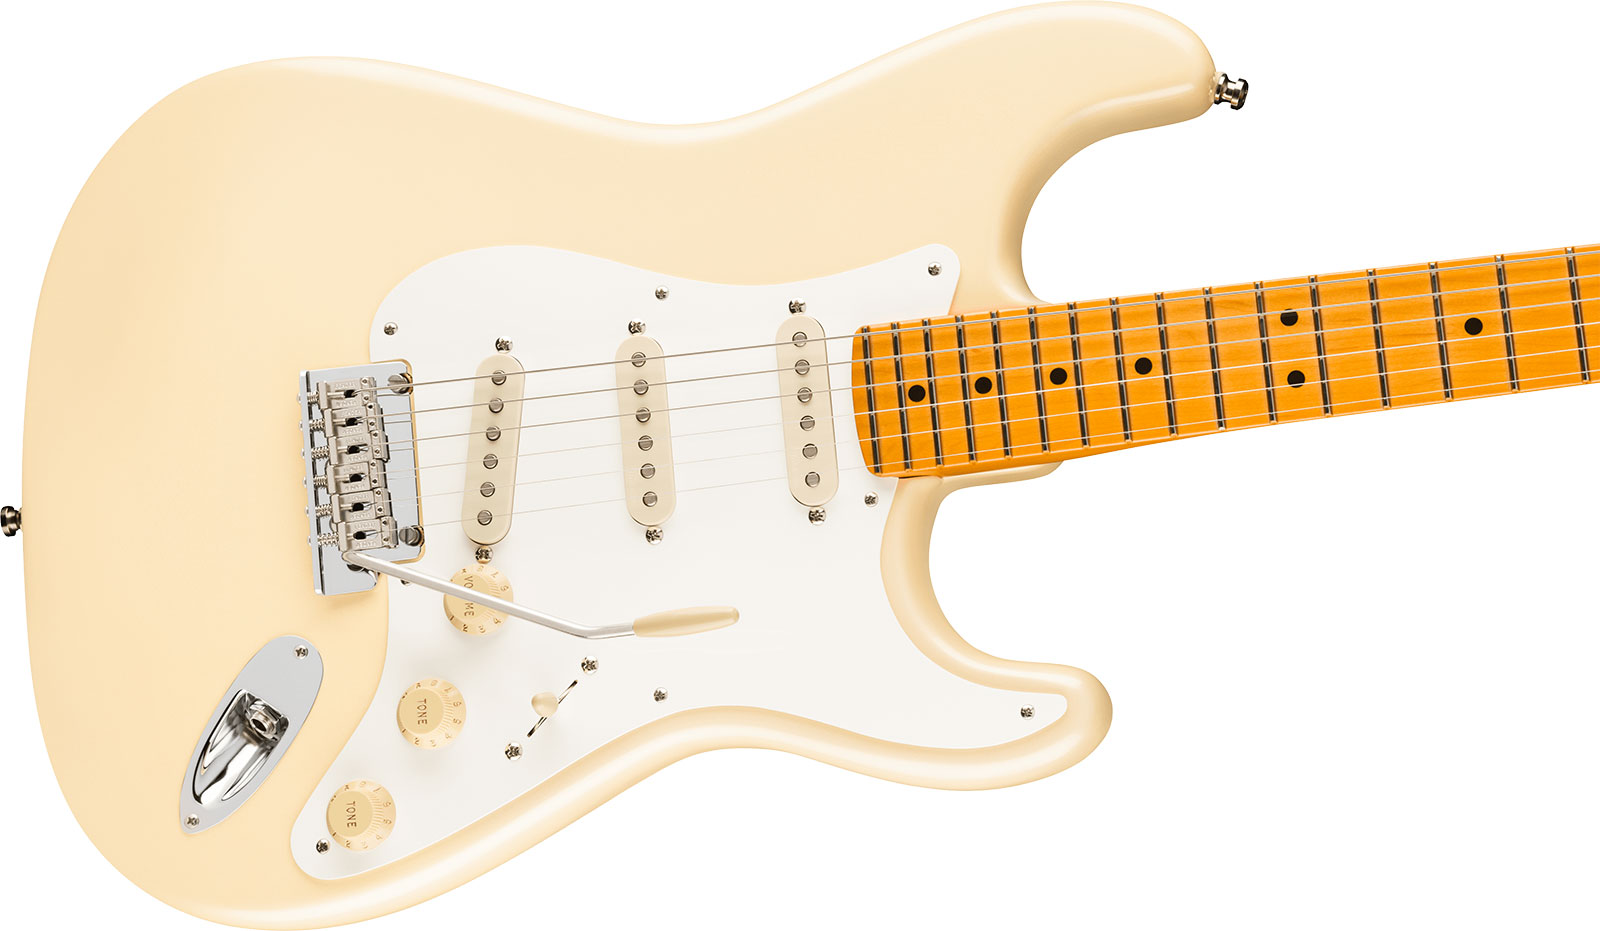 Fender Lincoln Brewster Strat Usa Signature 3s Dimarzio Trem Mn - Olympic Pearl - Guitarra electrica retro rock - Variation 2